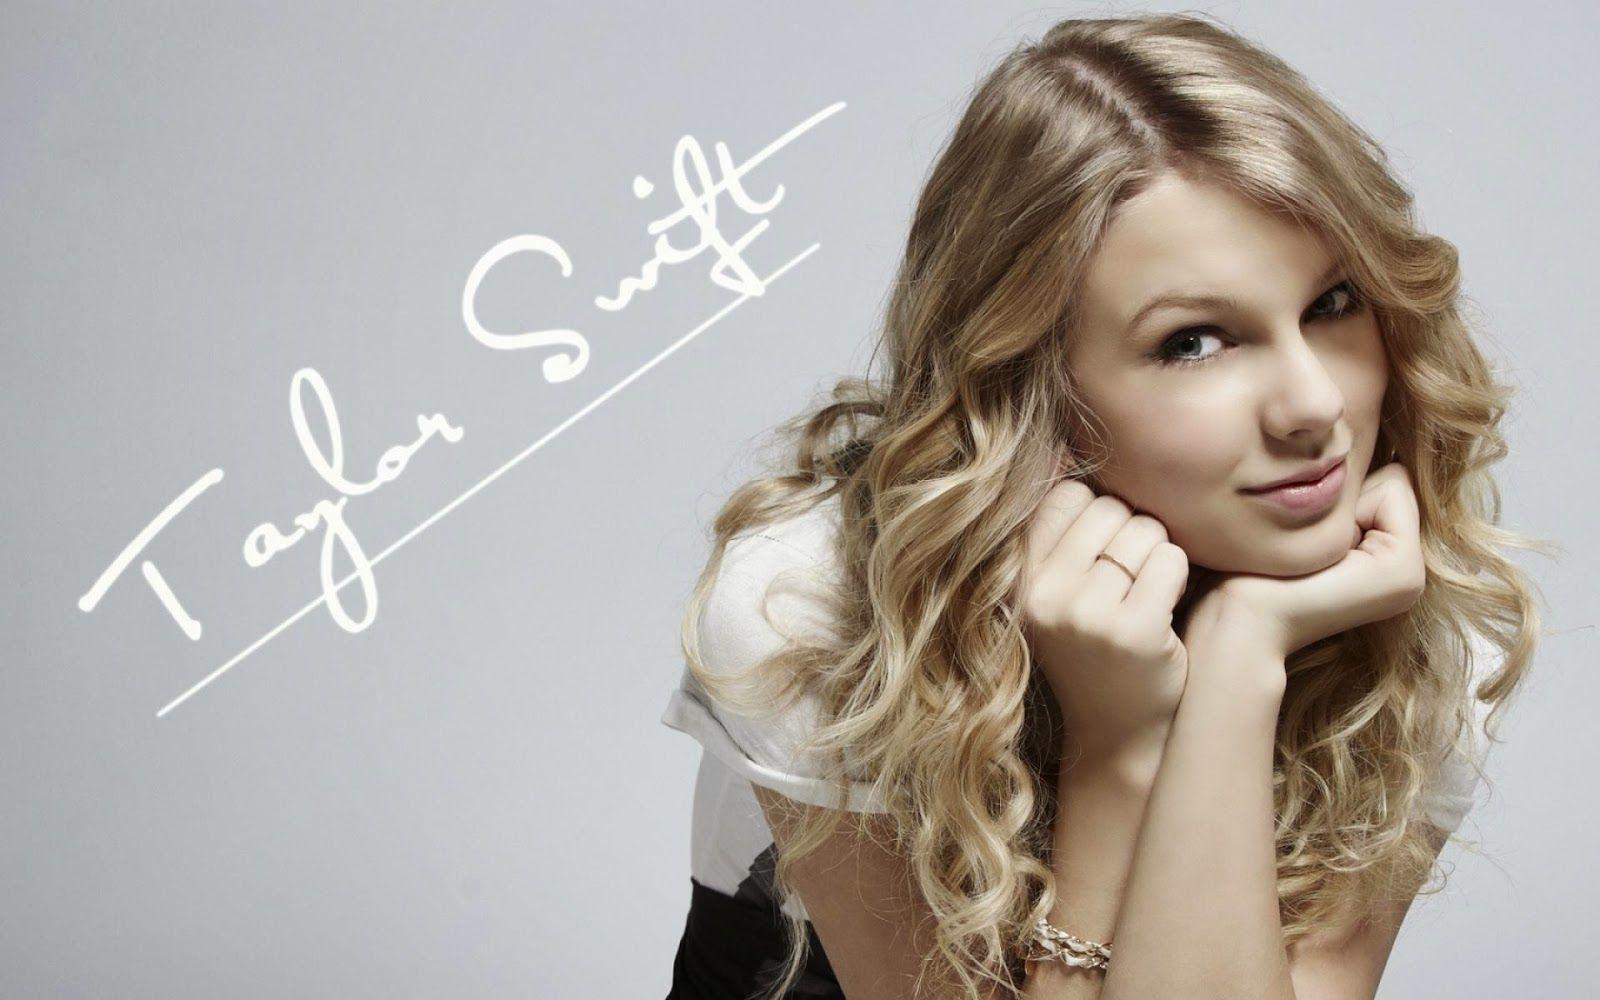 Picture: Taylor Swift HD Wallpaper. Taylor swift wallpaper